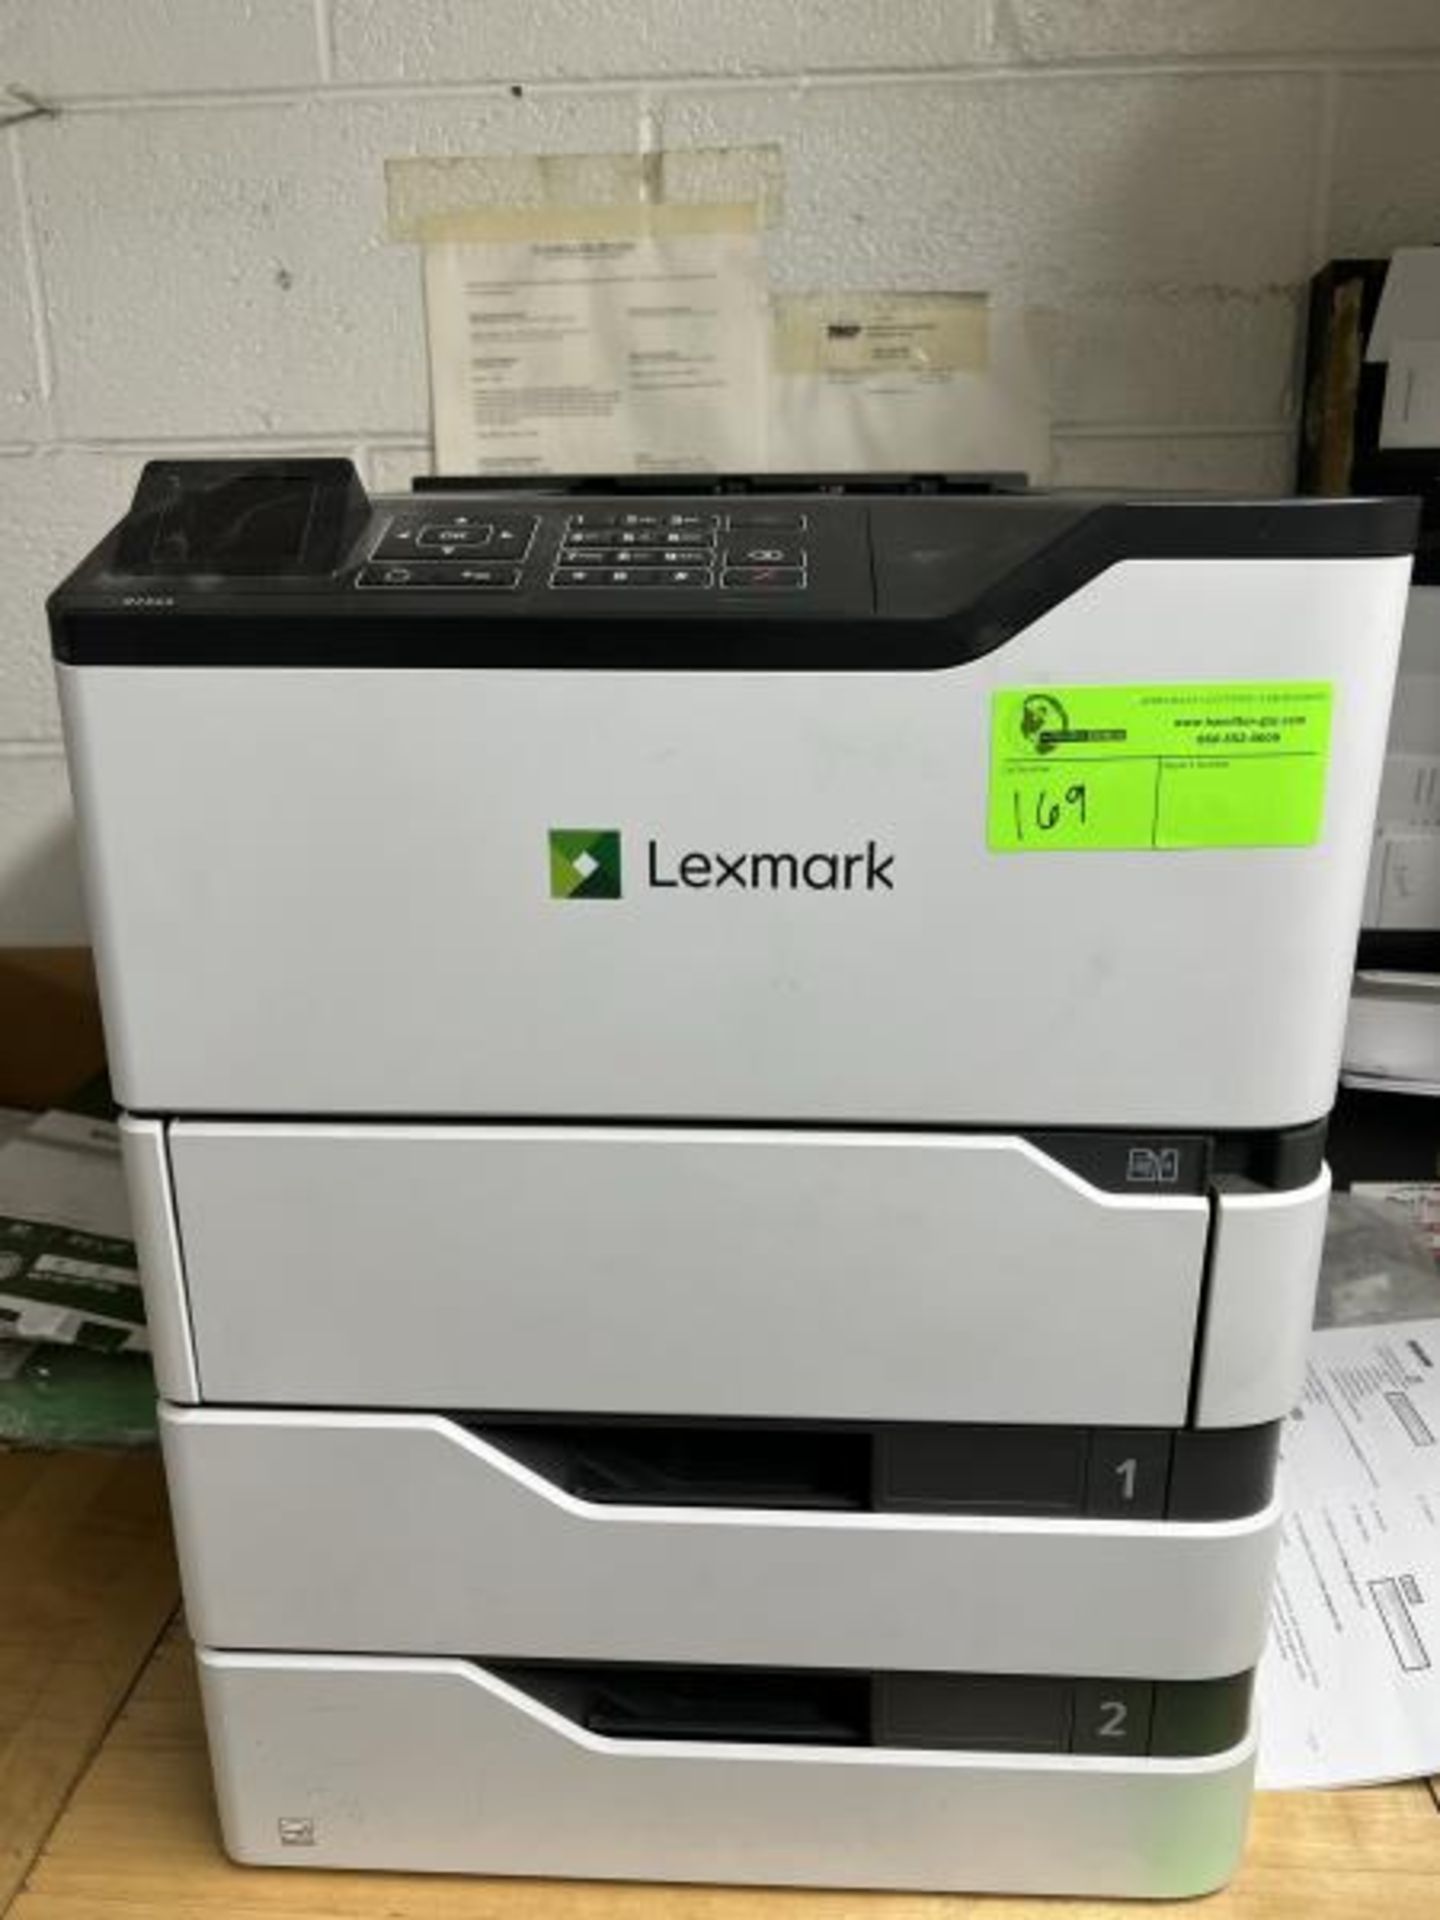 Lexmark Printer, B2865, Powers On